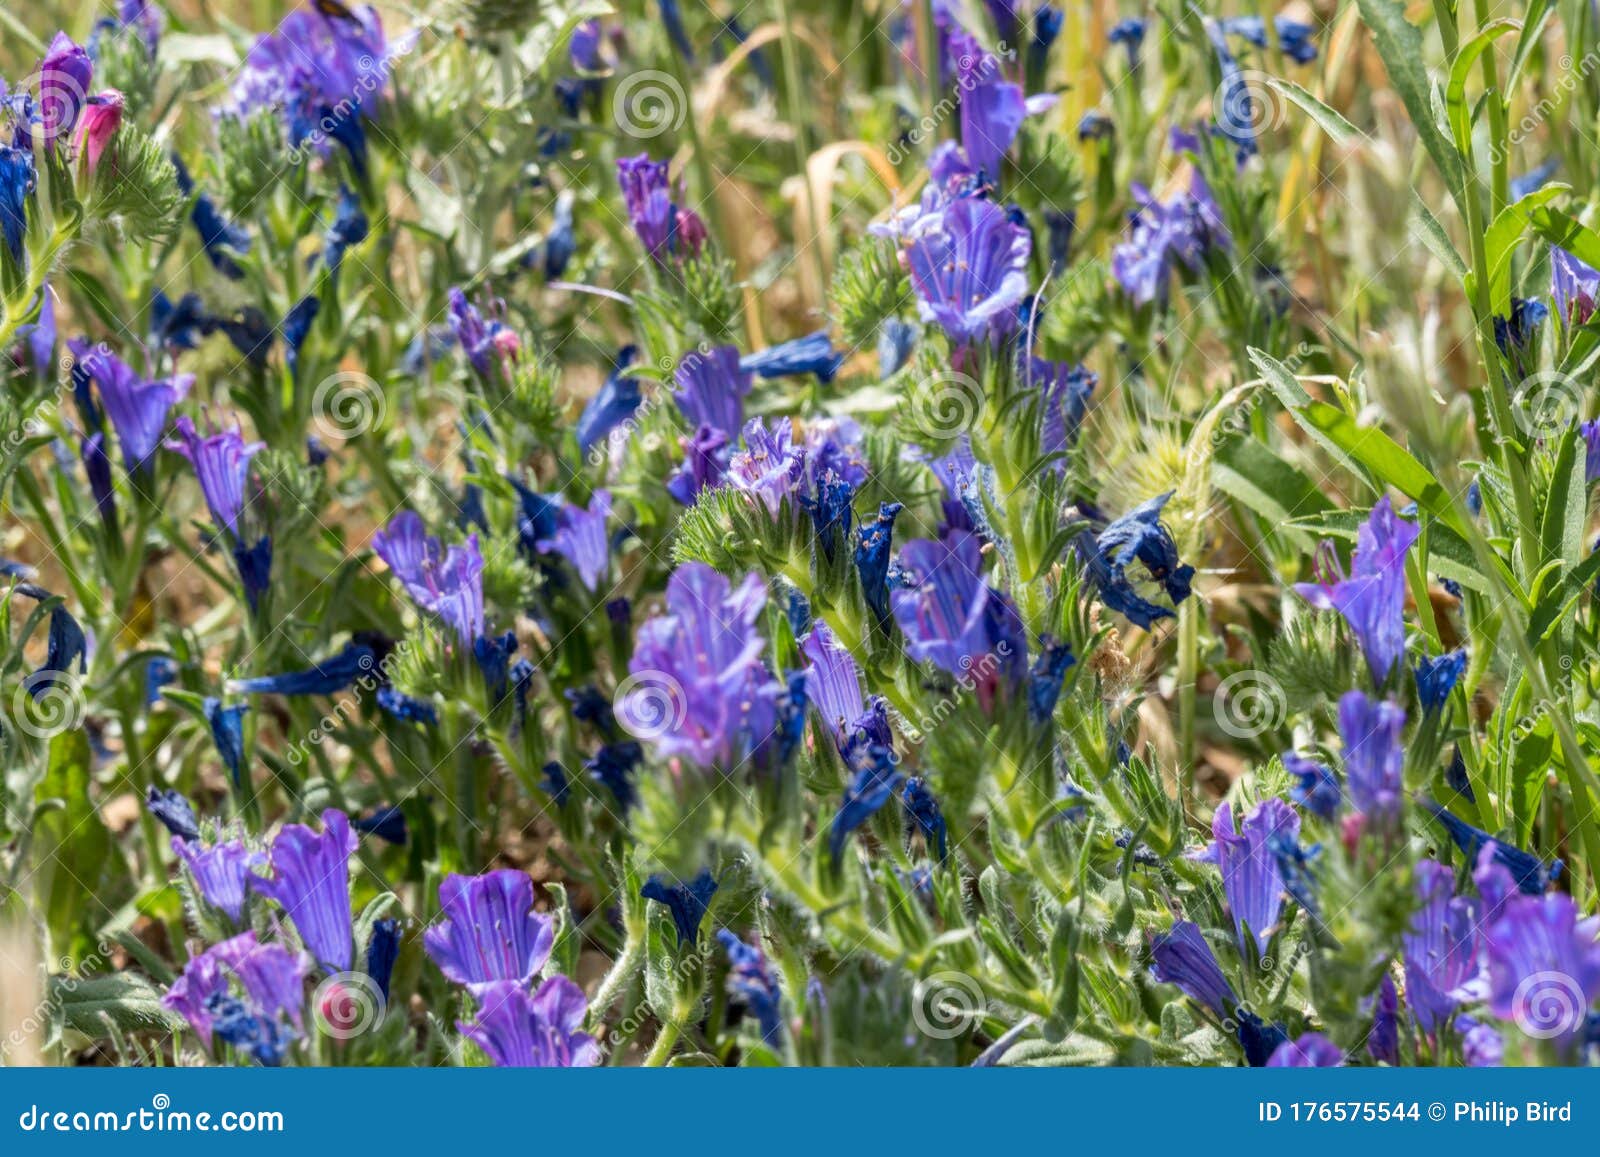 blue wild flowers growing near lake liscia